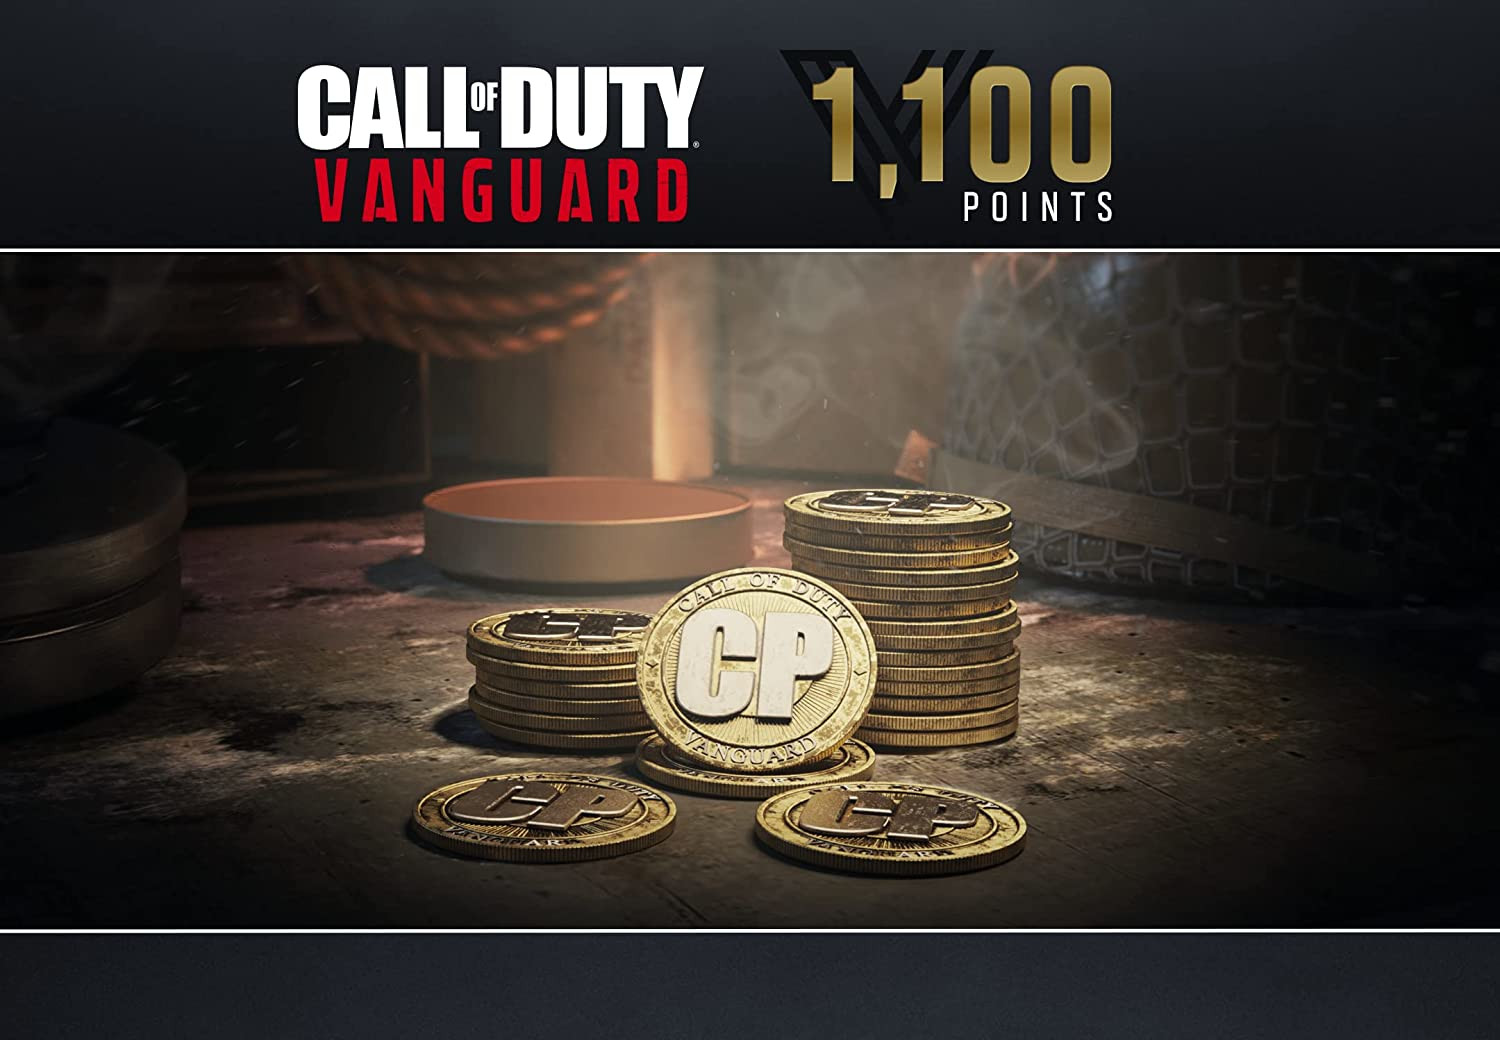 [$ 11.37] Call of Duty: Vanguard - 1100 Points XBOX One / Xbox Series X|S CD Key